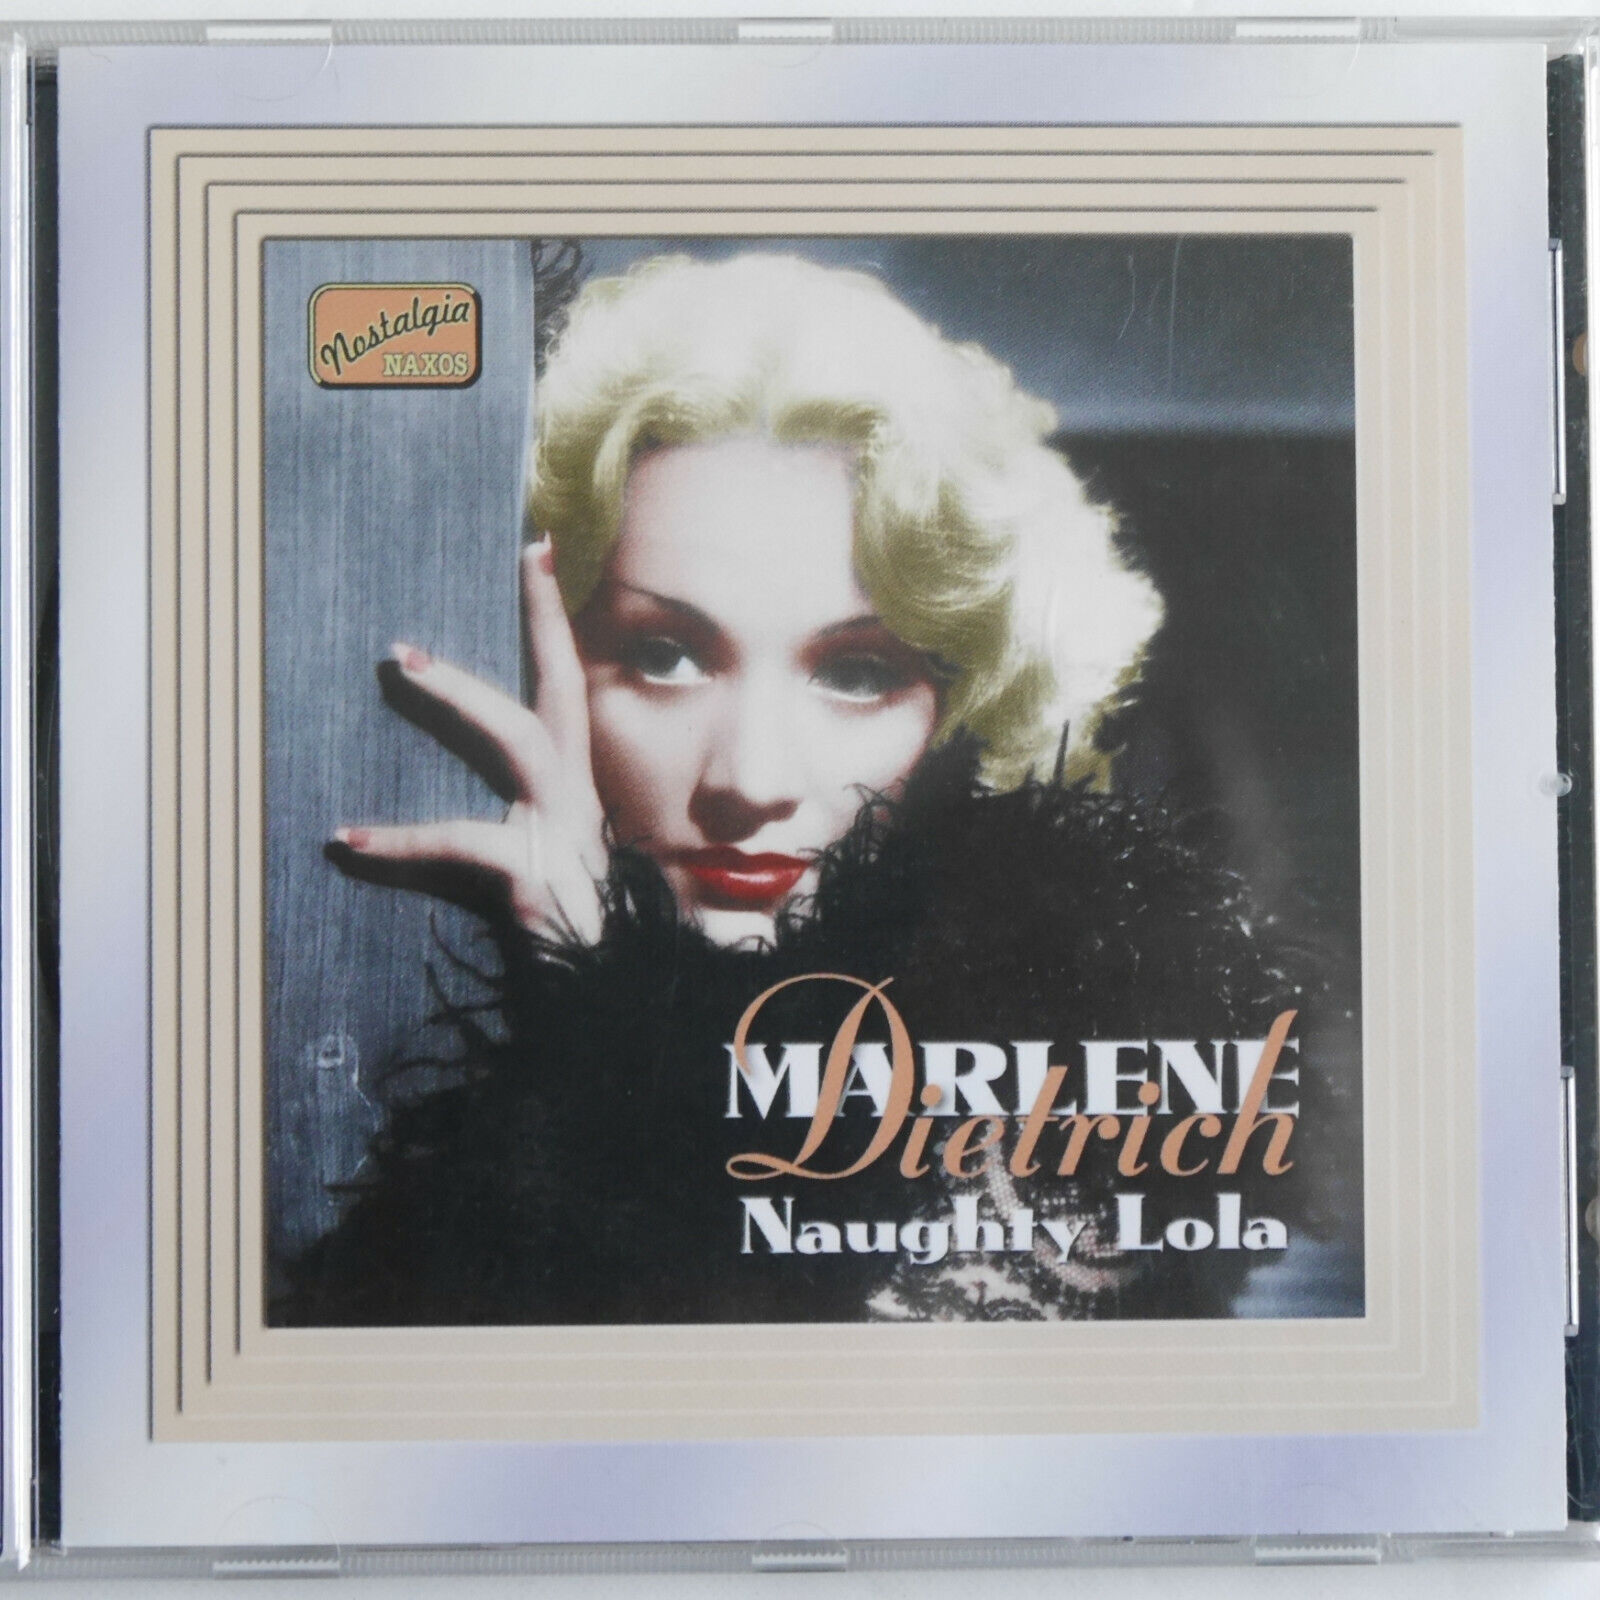 5278 Marlene Dietrich - Naughty Lola: Original Recordings 1928-1941 CD album